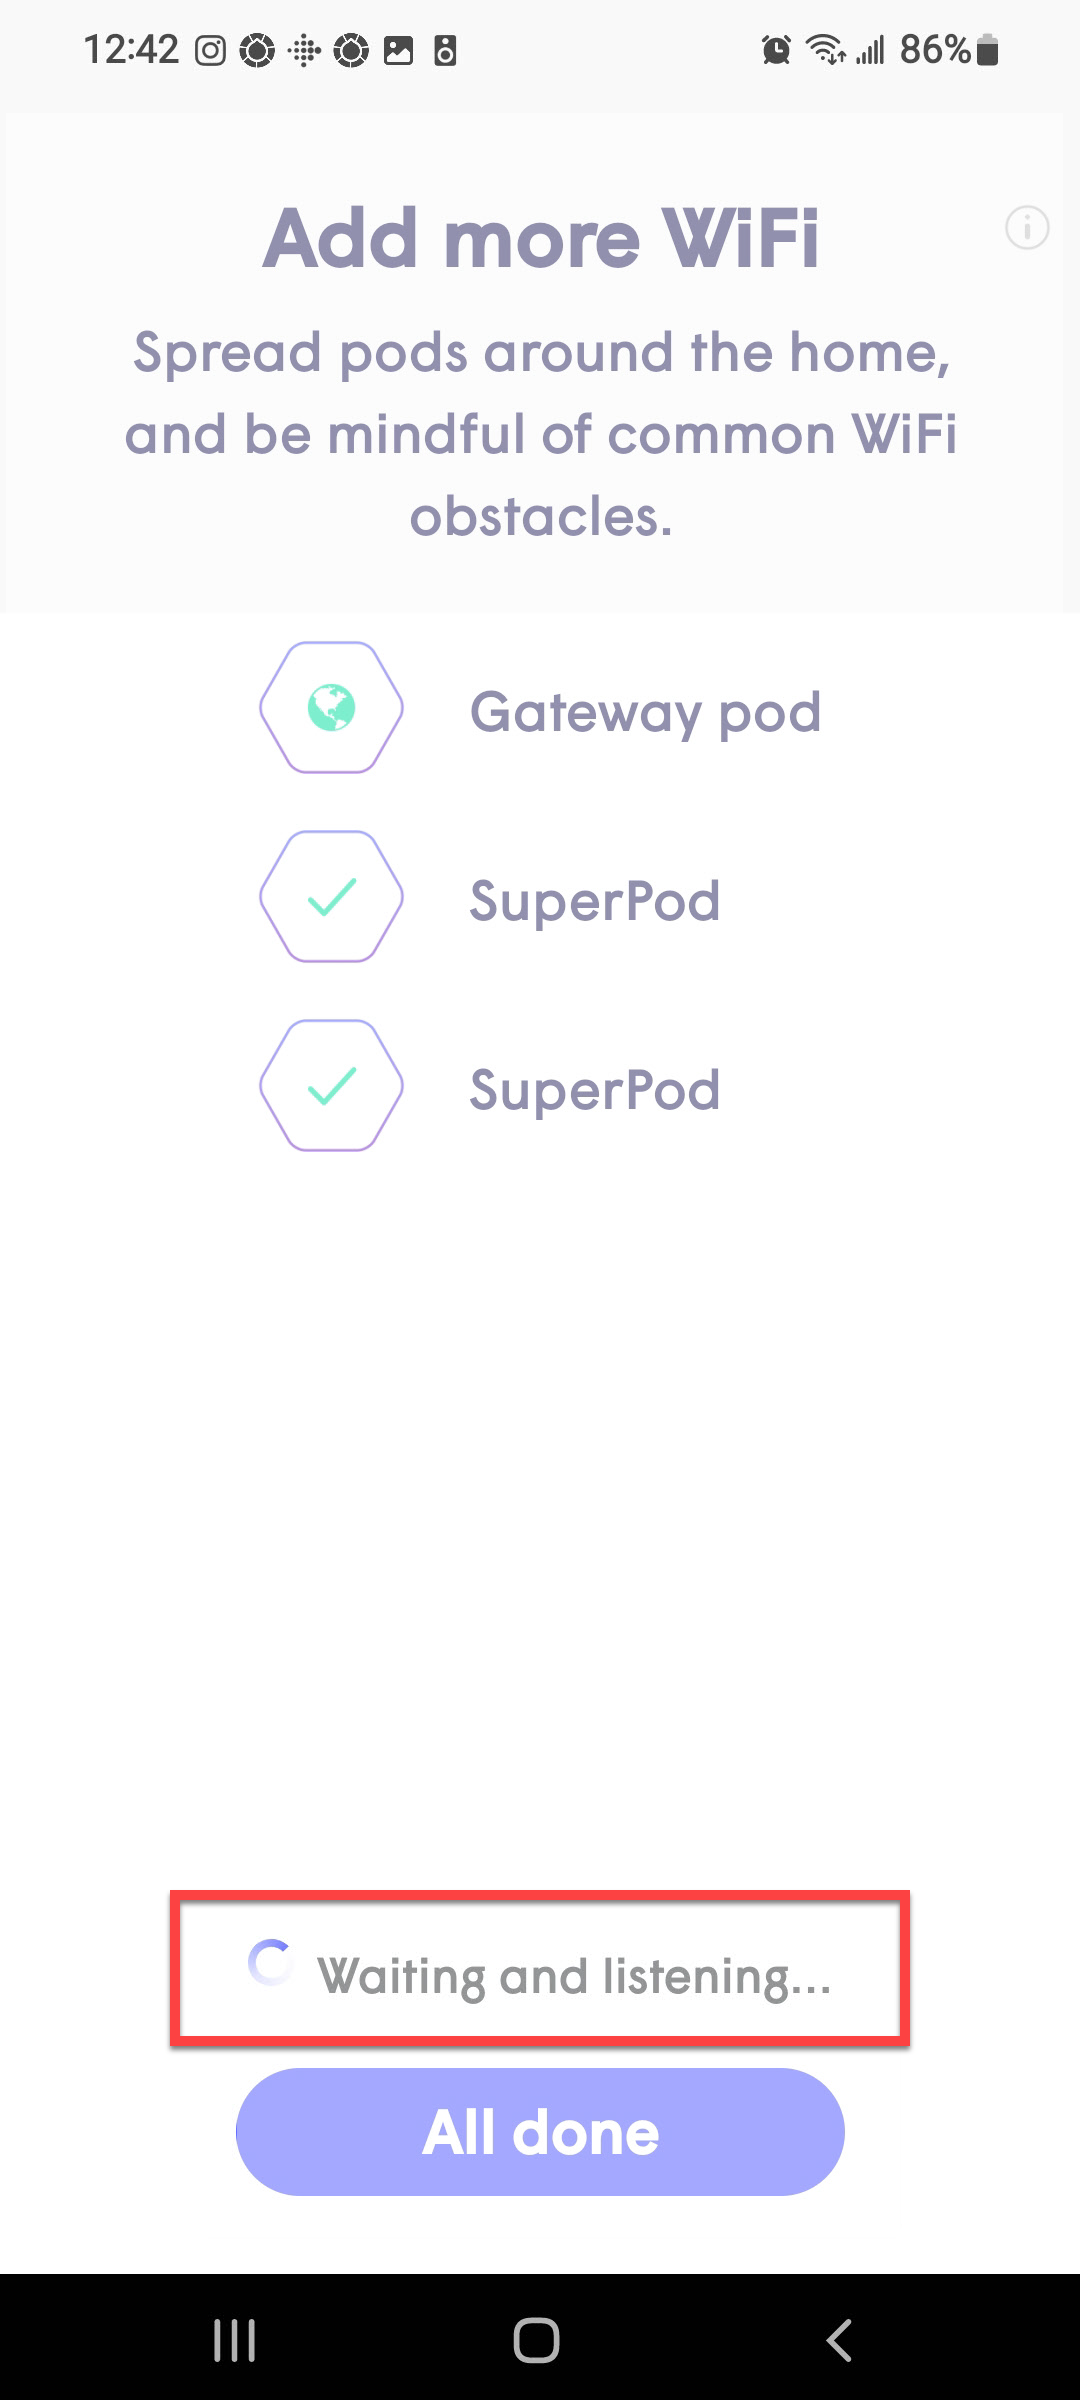 360 WiFi app add pod, waiting and listening